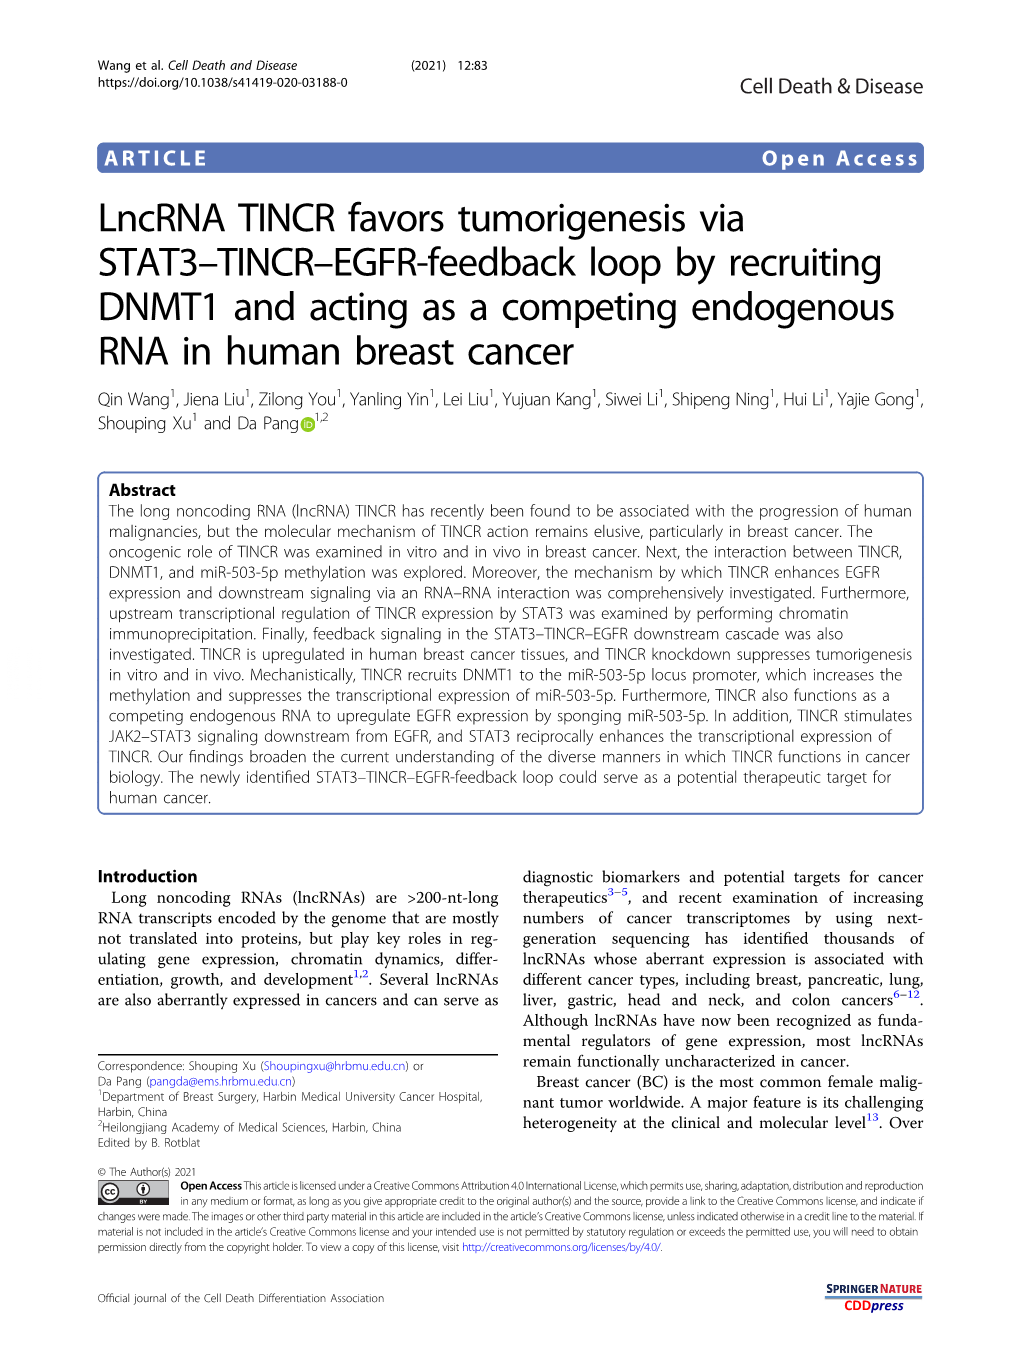 Lncrna TINCR Favors Tumorigenesis Via STAT3–TINCR–EGFR-Feedback